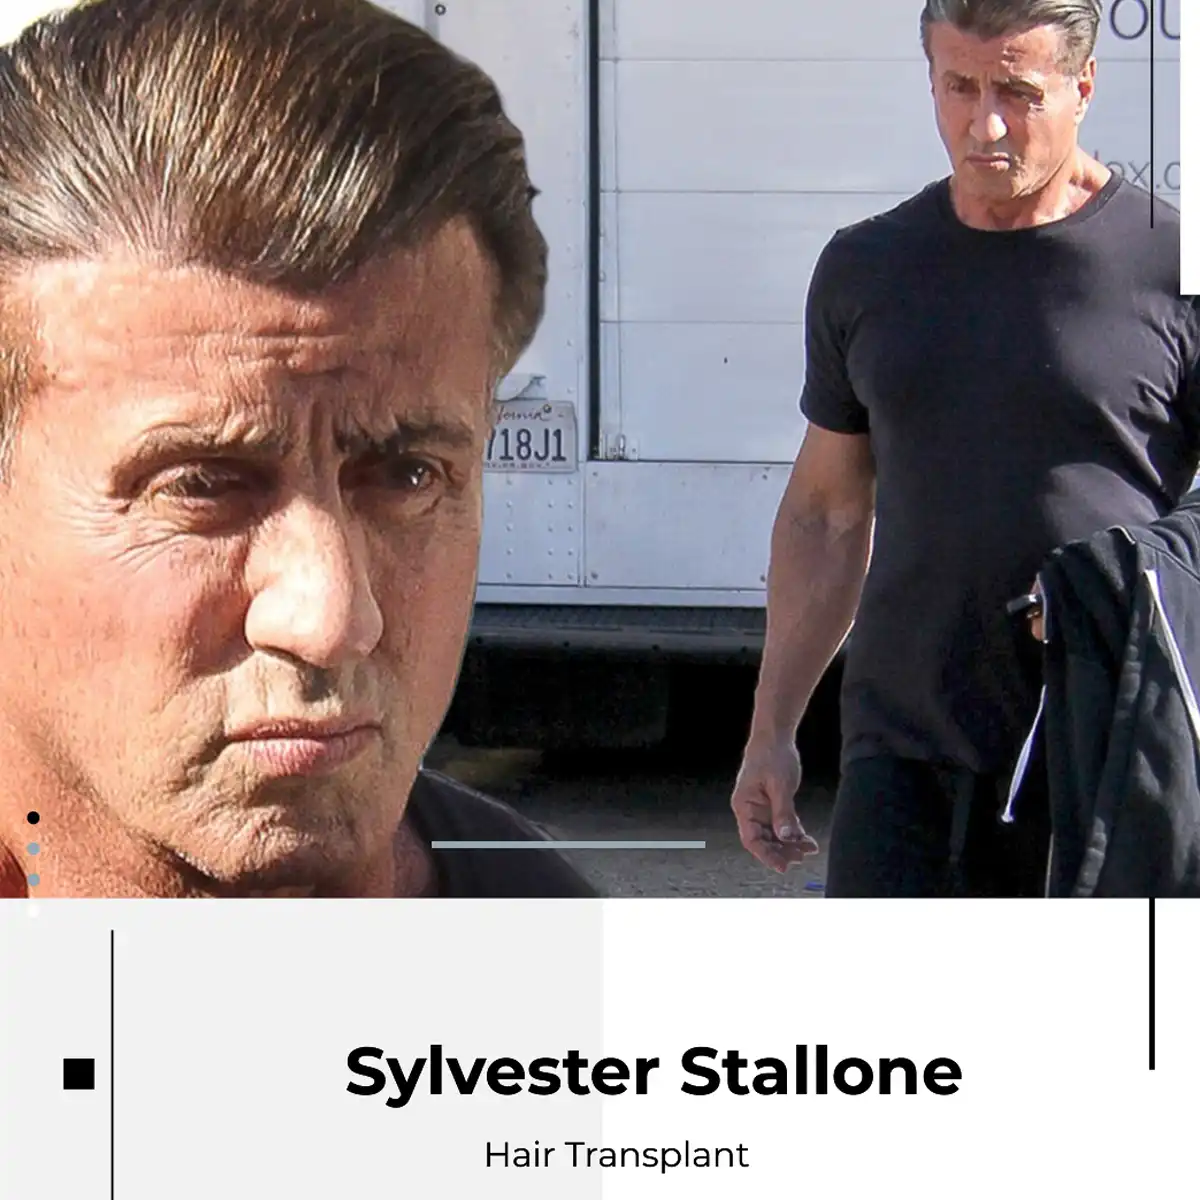 Sylvester Stallone Hair Transplant